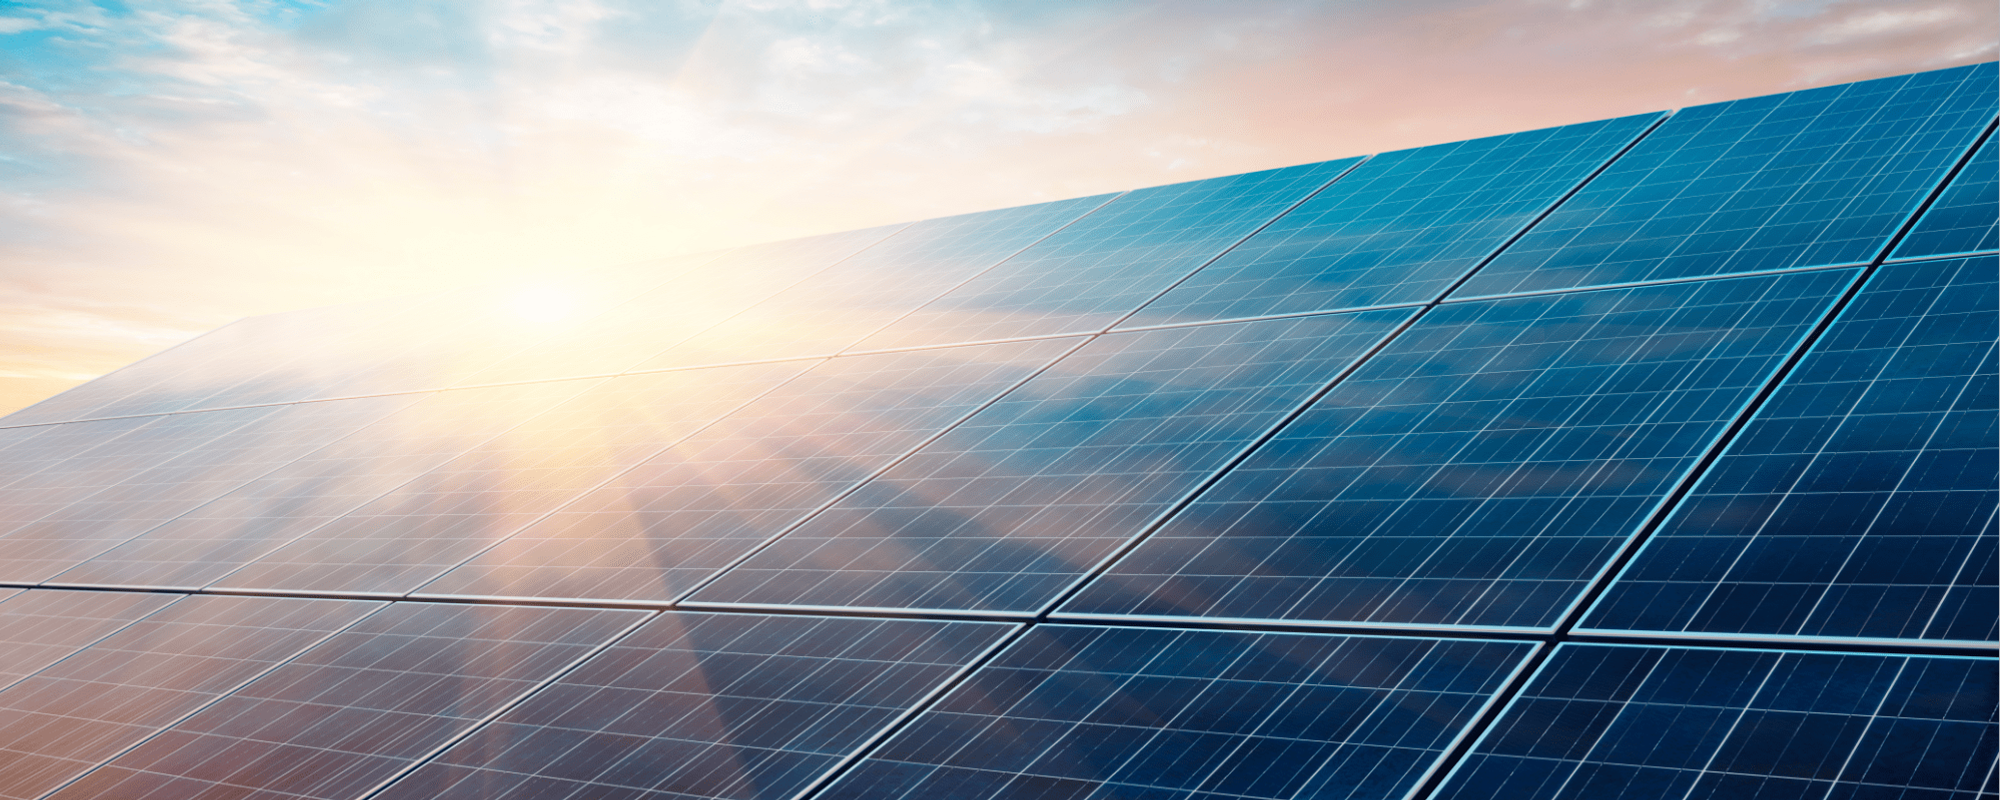 Solar Panels Renewable Energy Battery Storage Jobs 